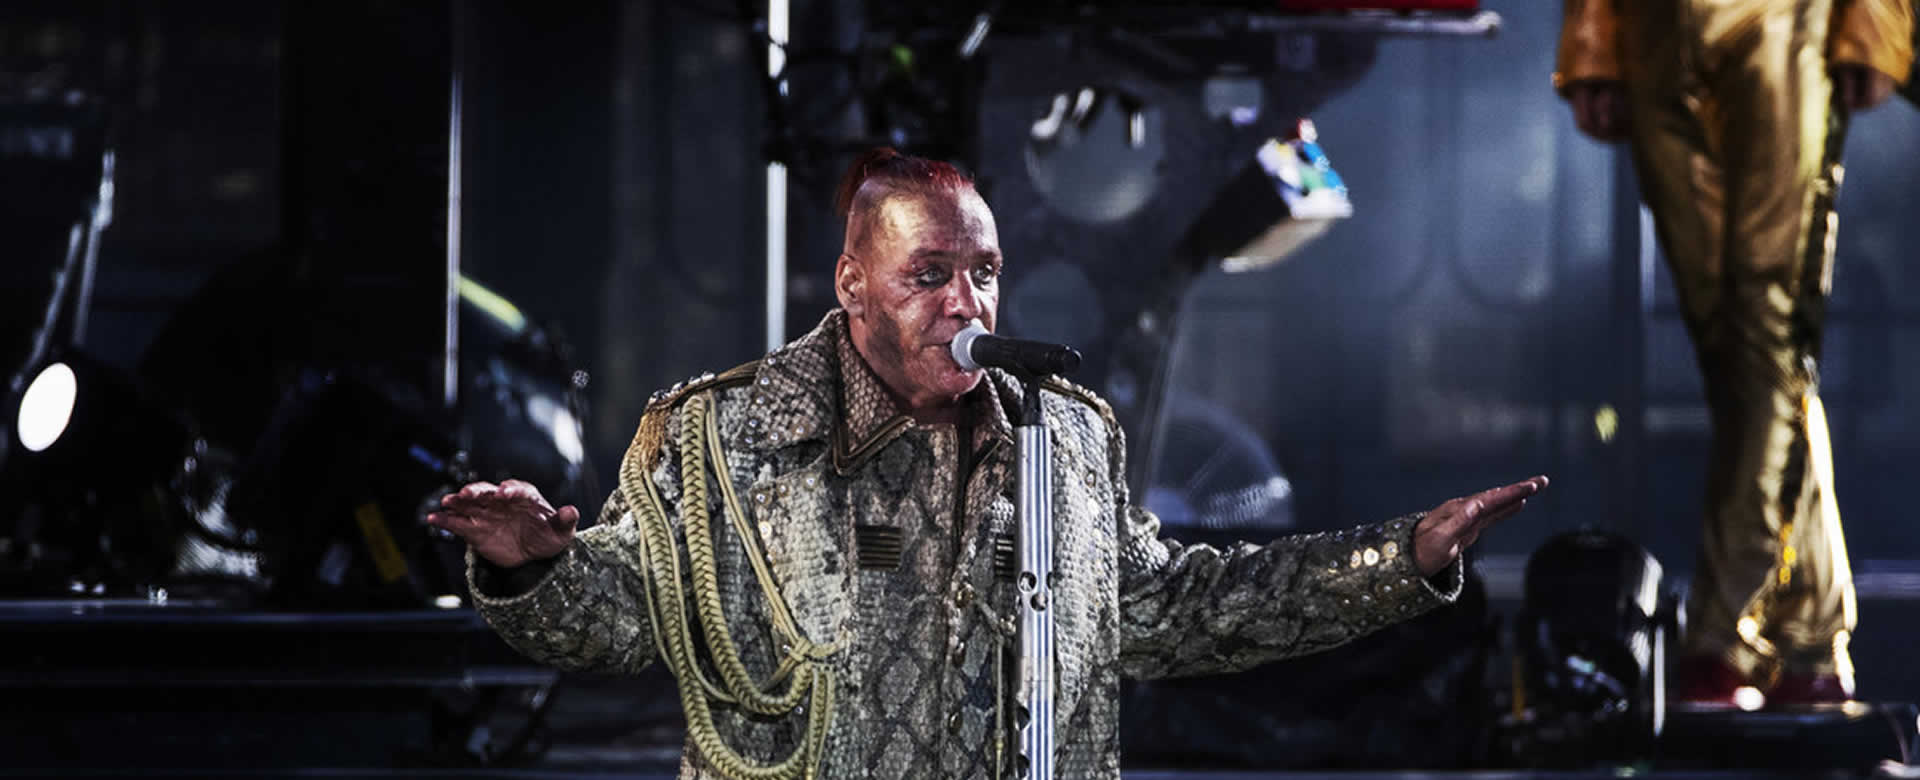 Vocalista de Rammstein dio positivo a Coronavirus en Berlín